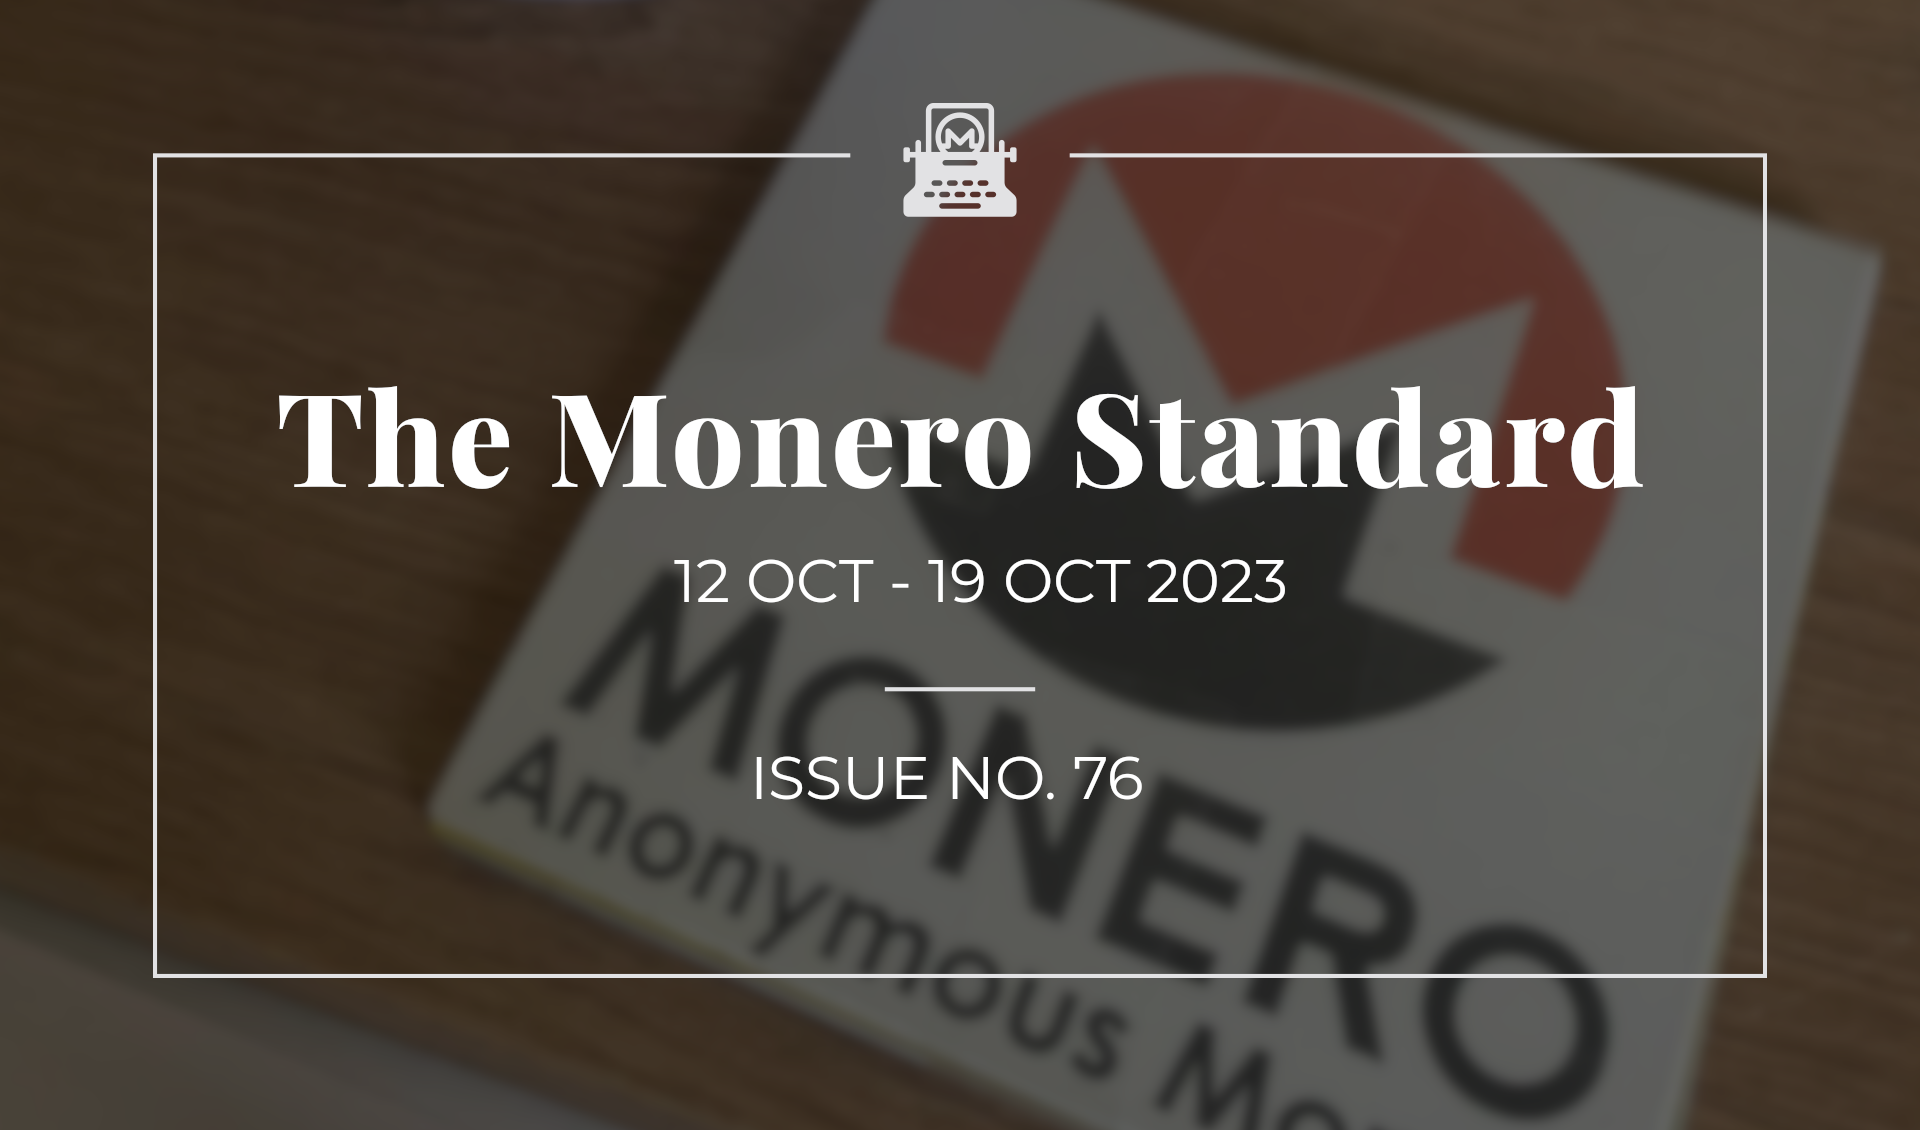 The Monero Standard #76: 12 Oct 2023 - 19 Oct 2023